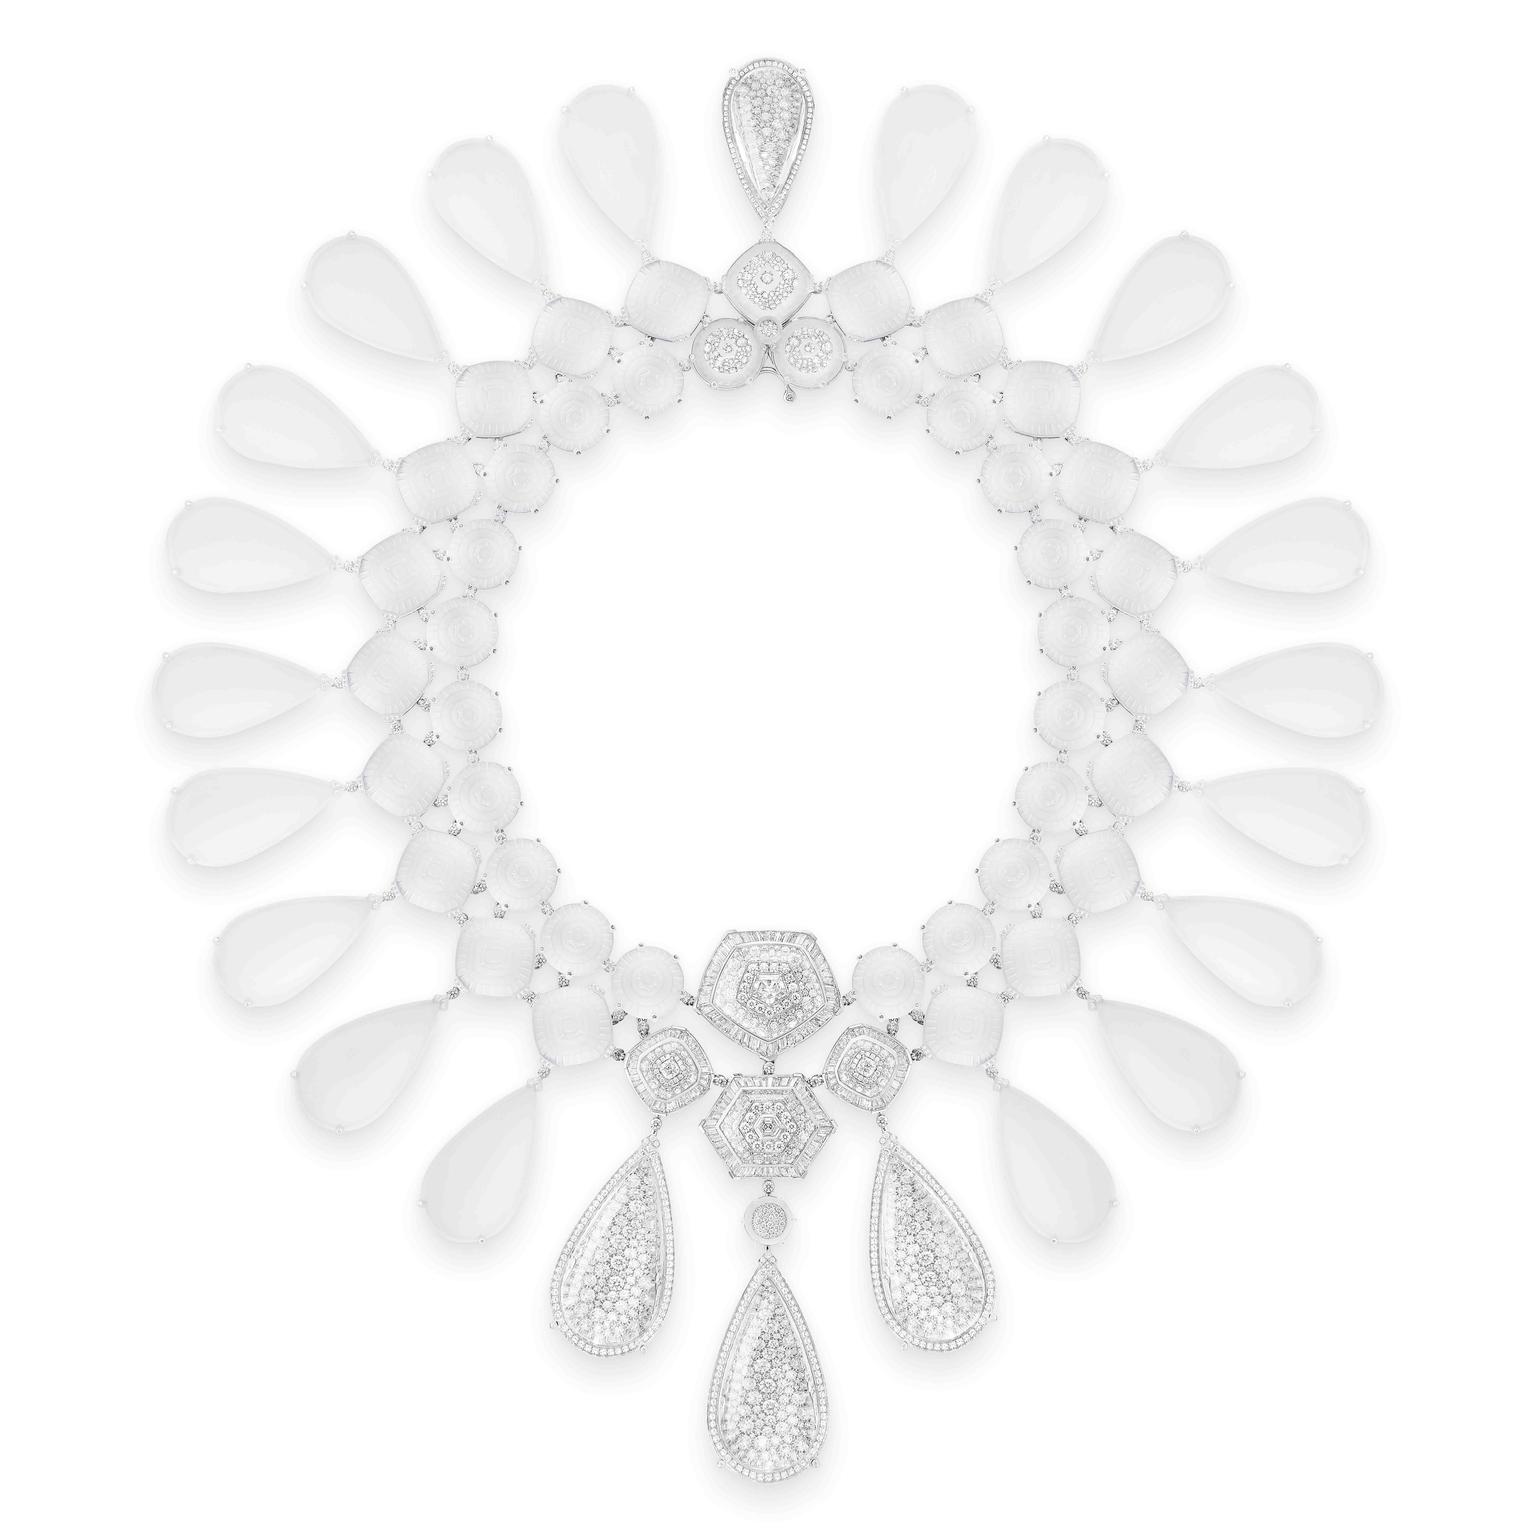 Iceberg necklace by Boucheron 